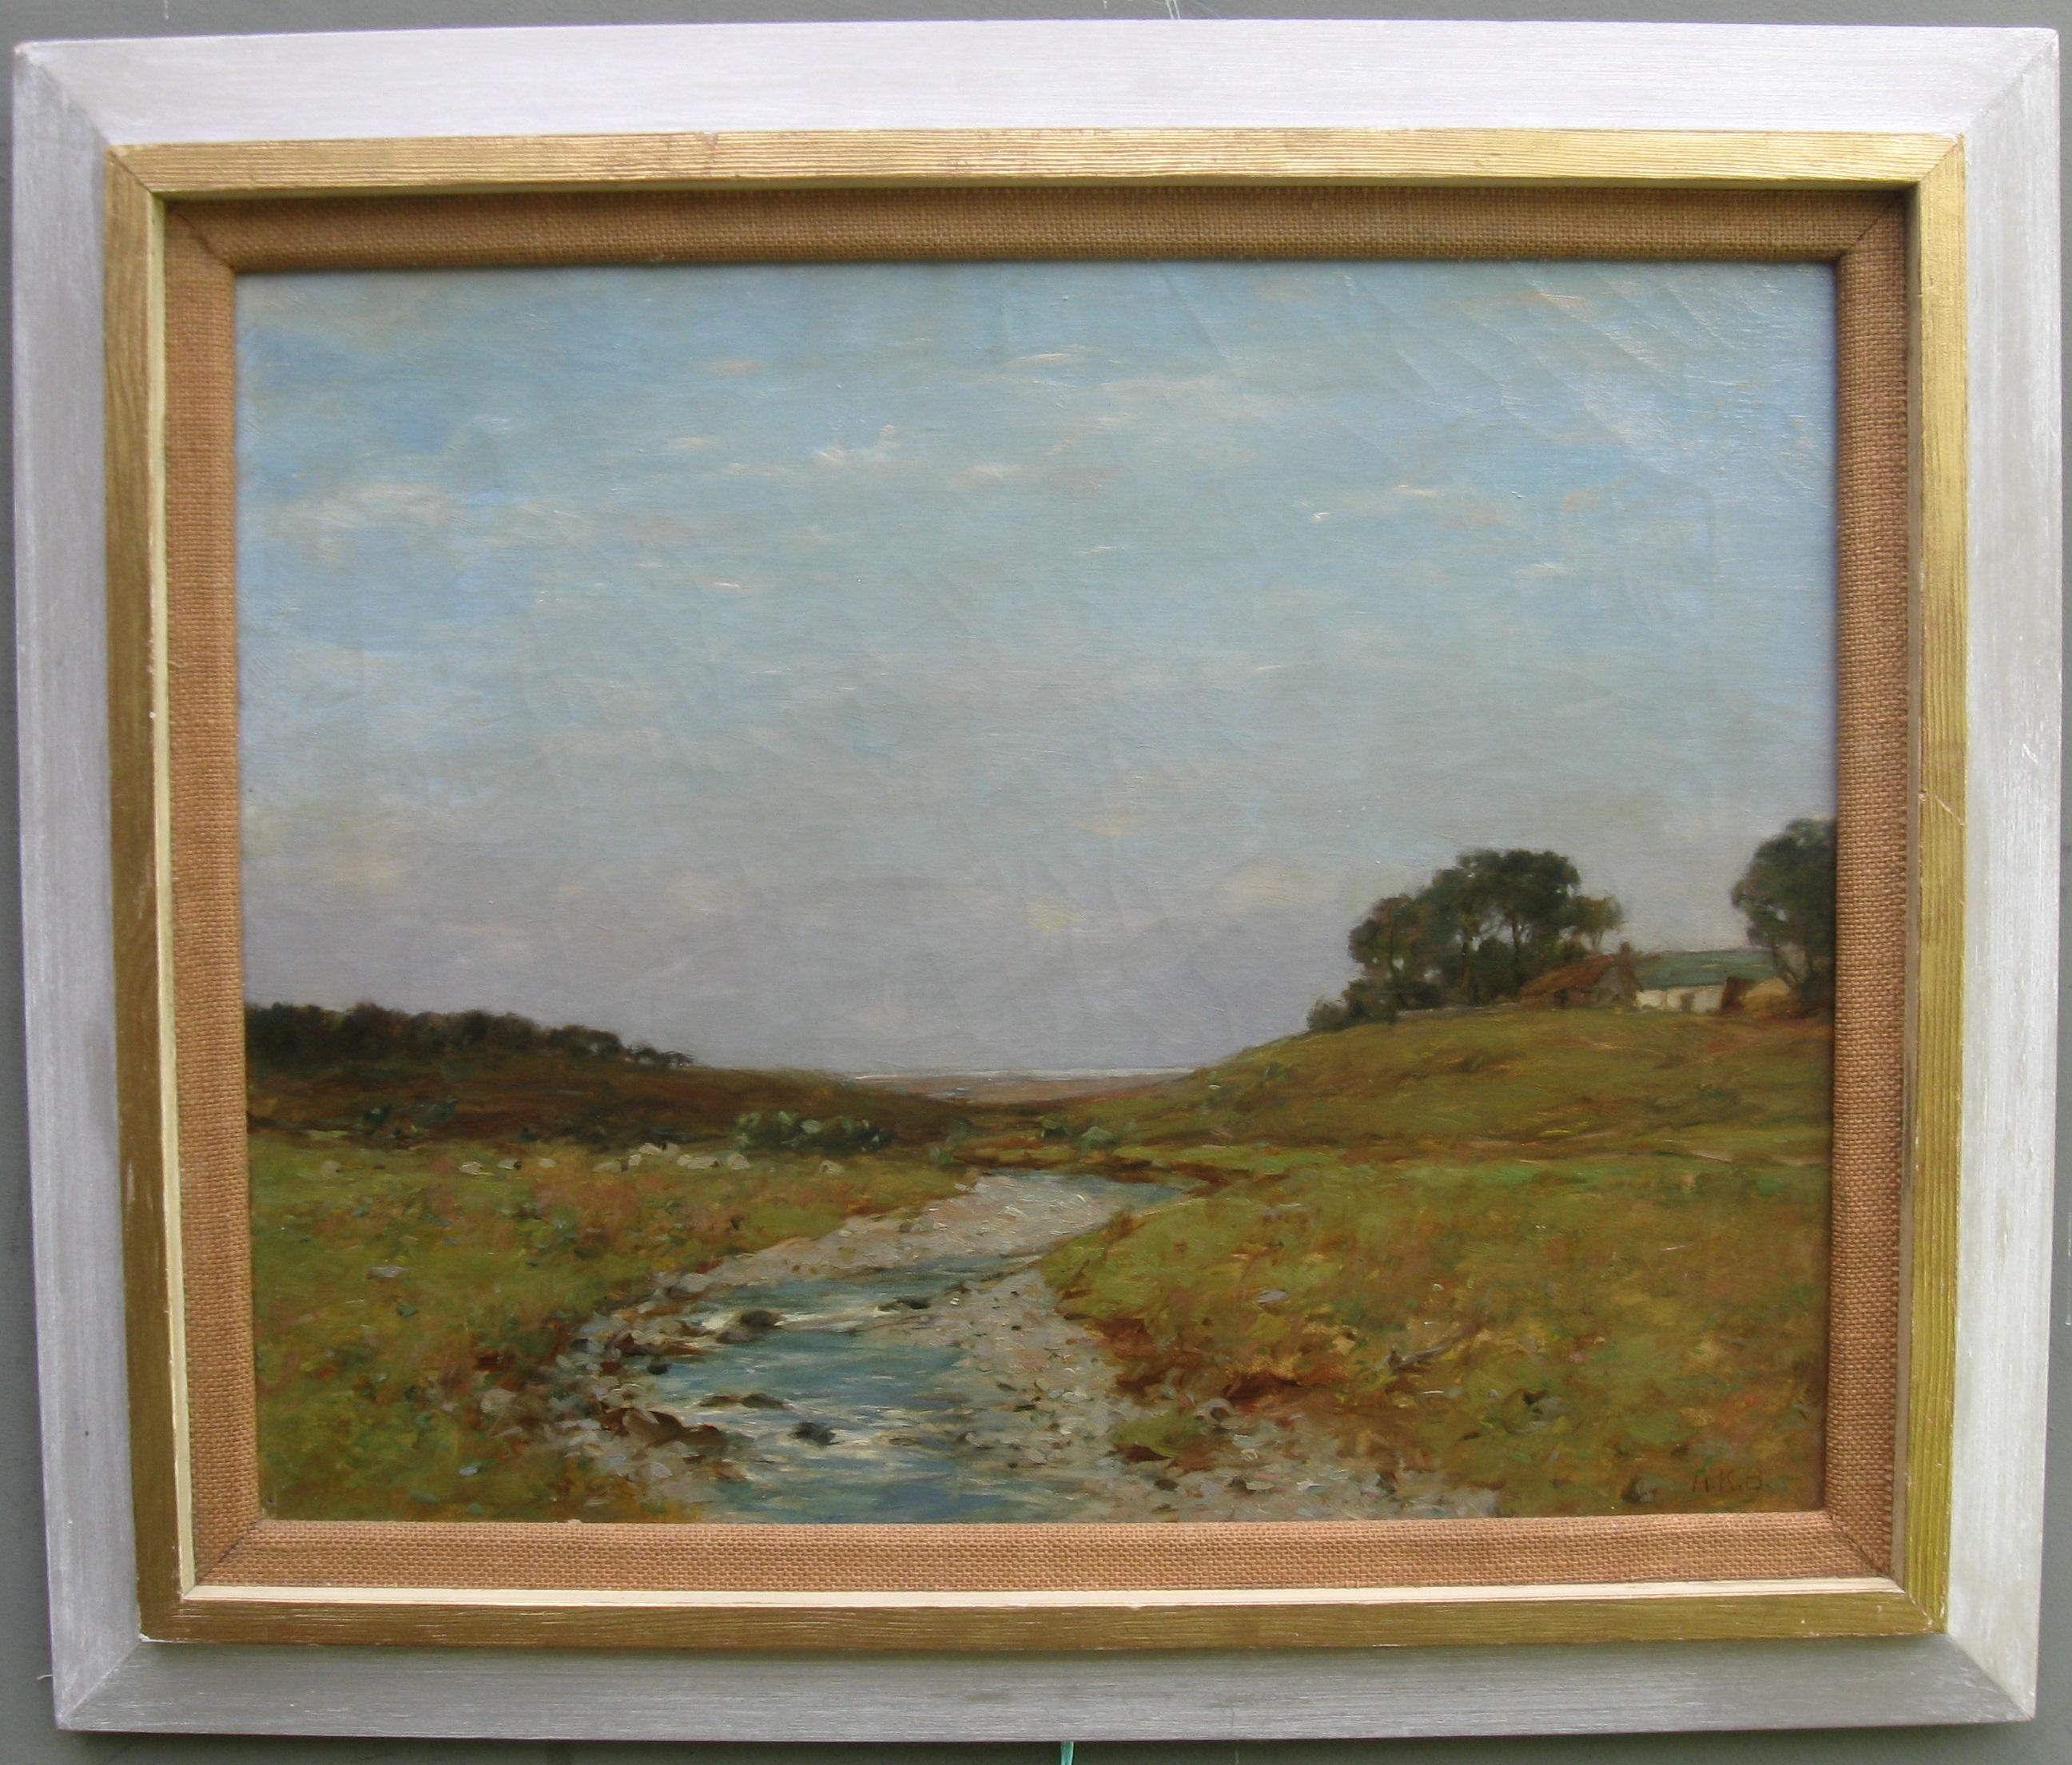 Alexander Kellock Brown Landscape Painting - 'Croft in a Coastal Landscape' oil on canvas circa 1910